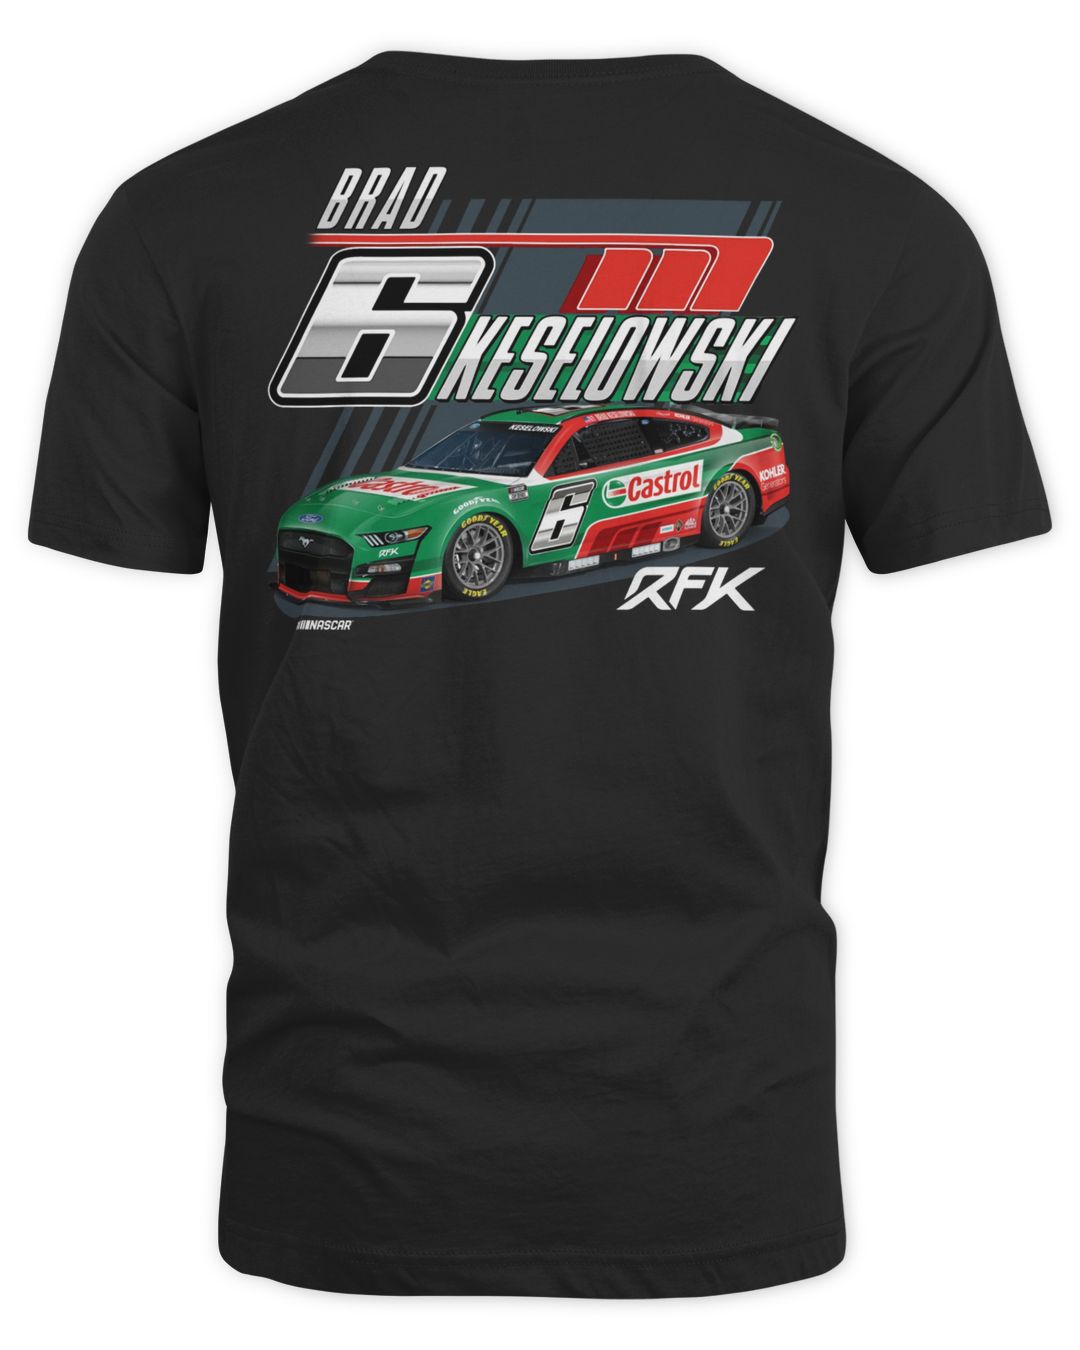 Brad Keselowski RFK Racing Castrol 2-Spot Graphic Shirt